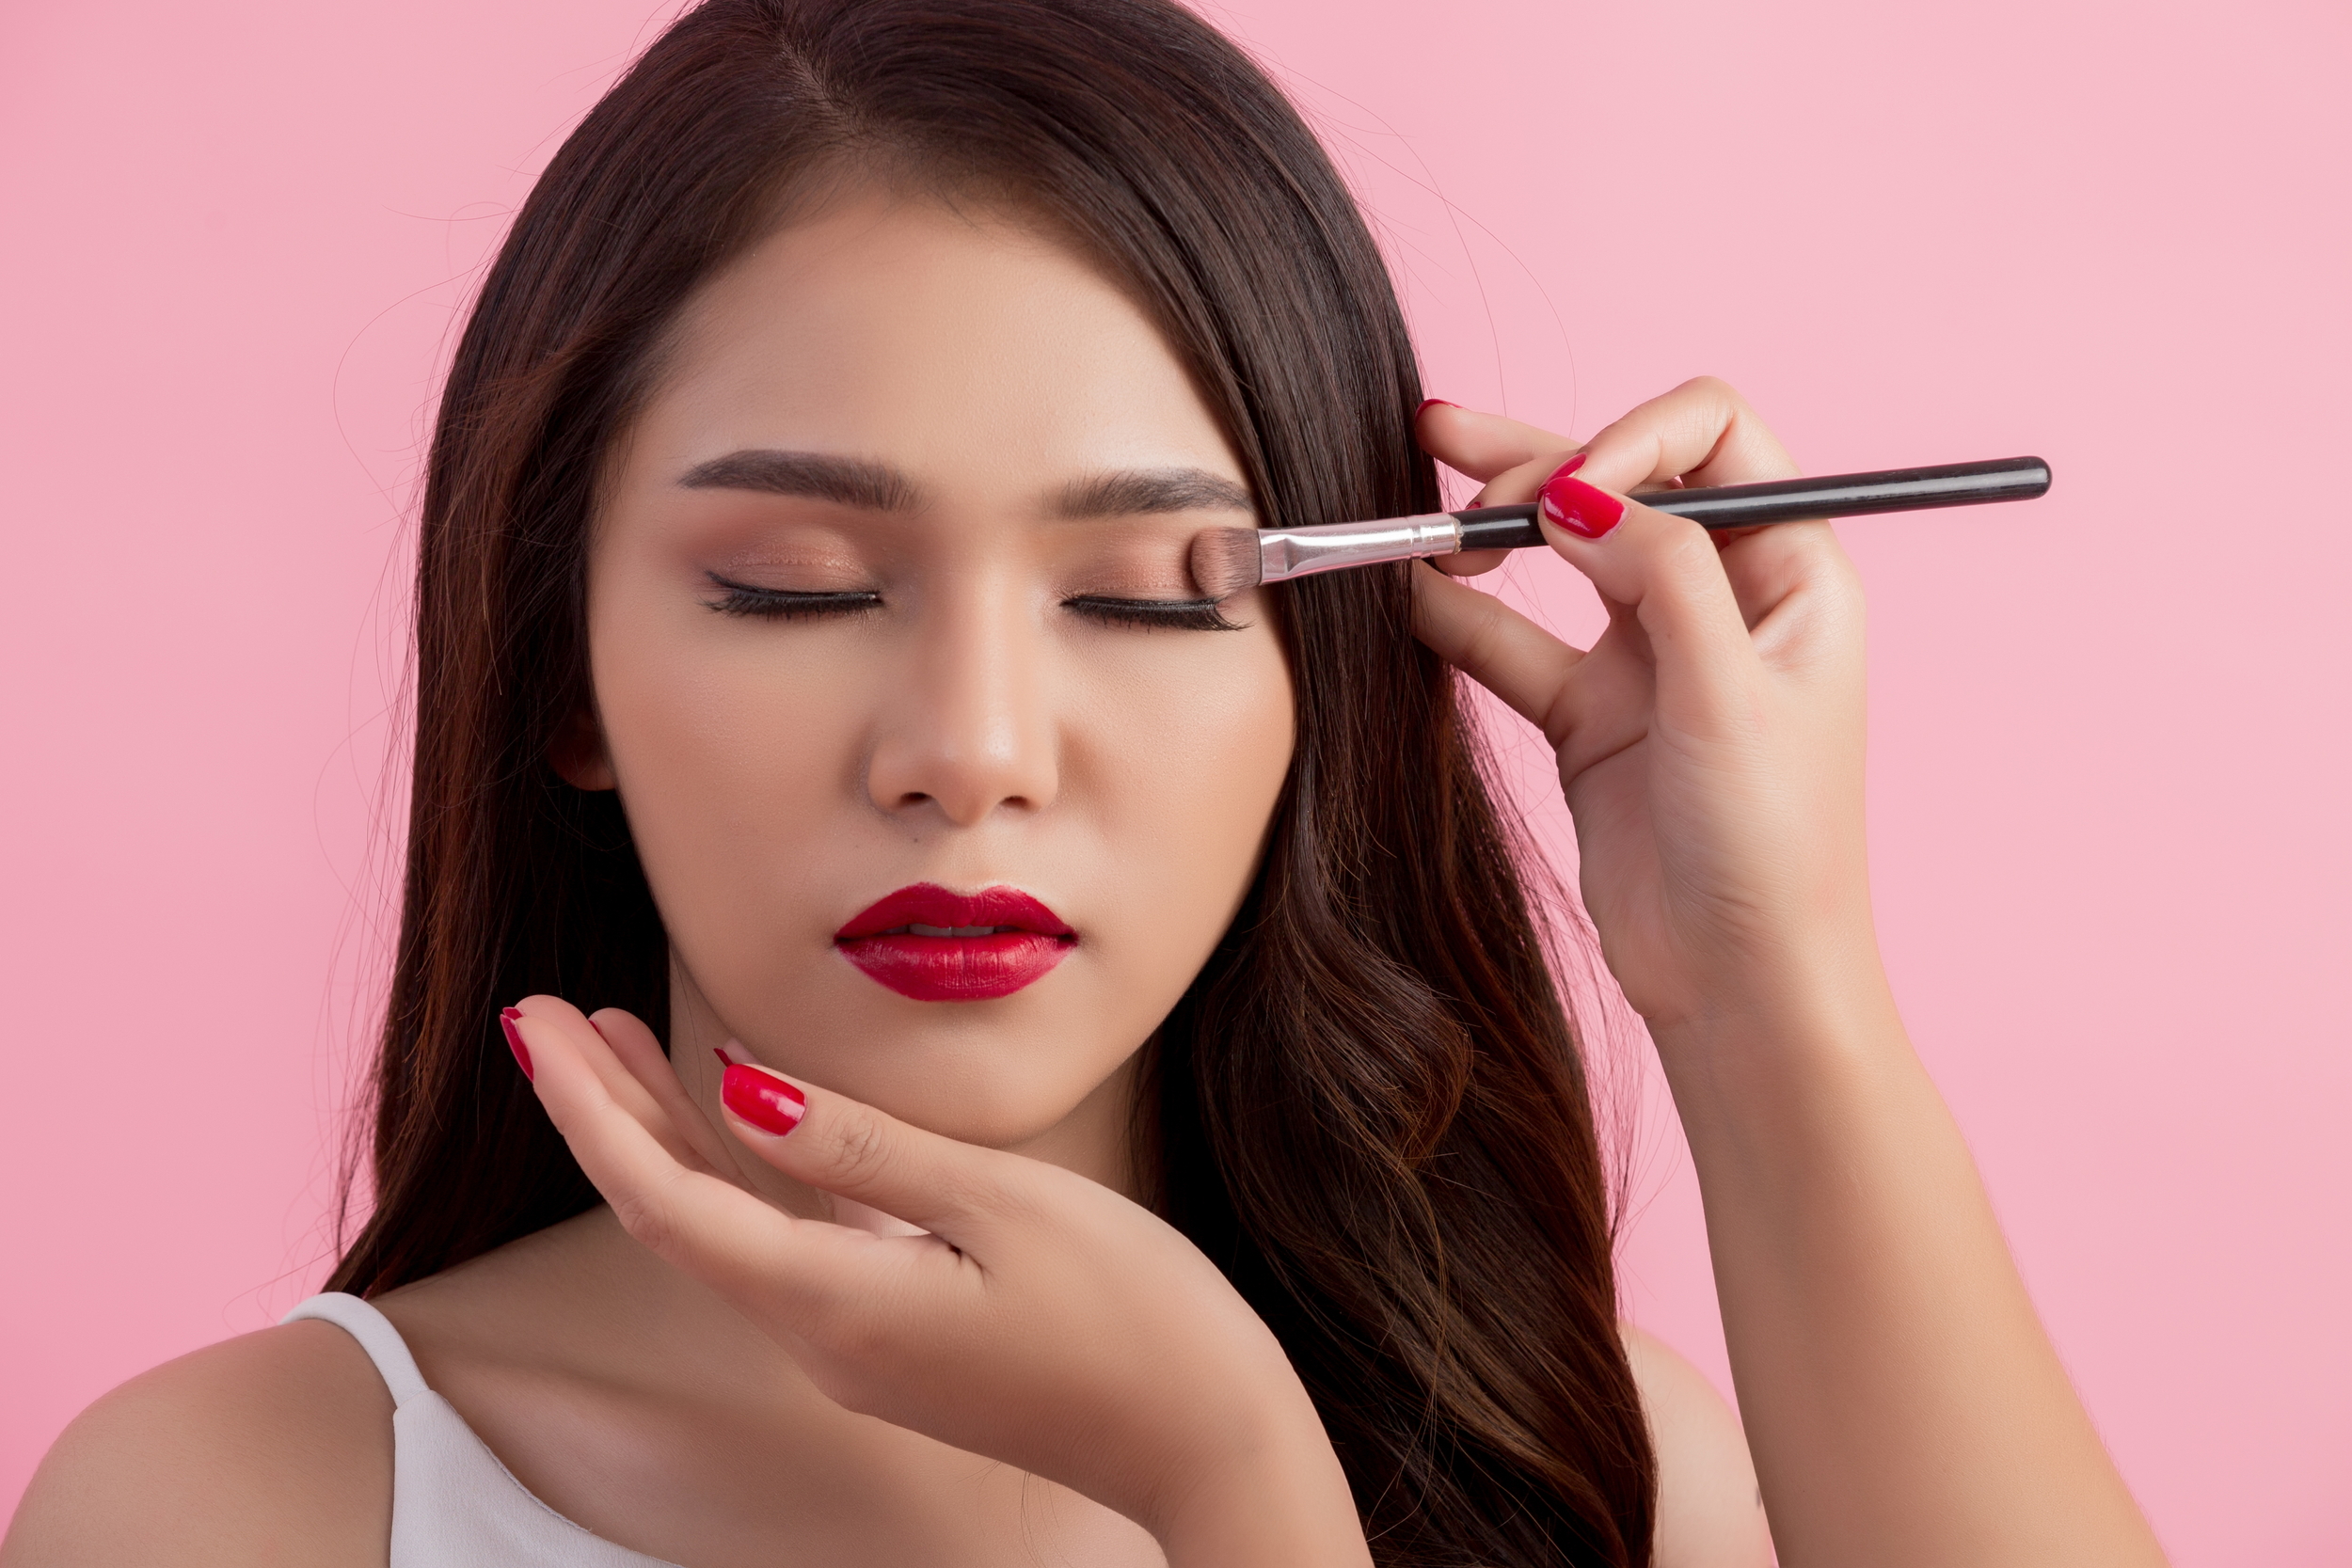 make-up-artist-applying-liquid-eyeliner-with-brush